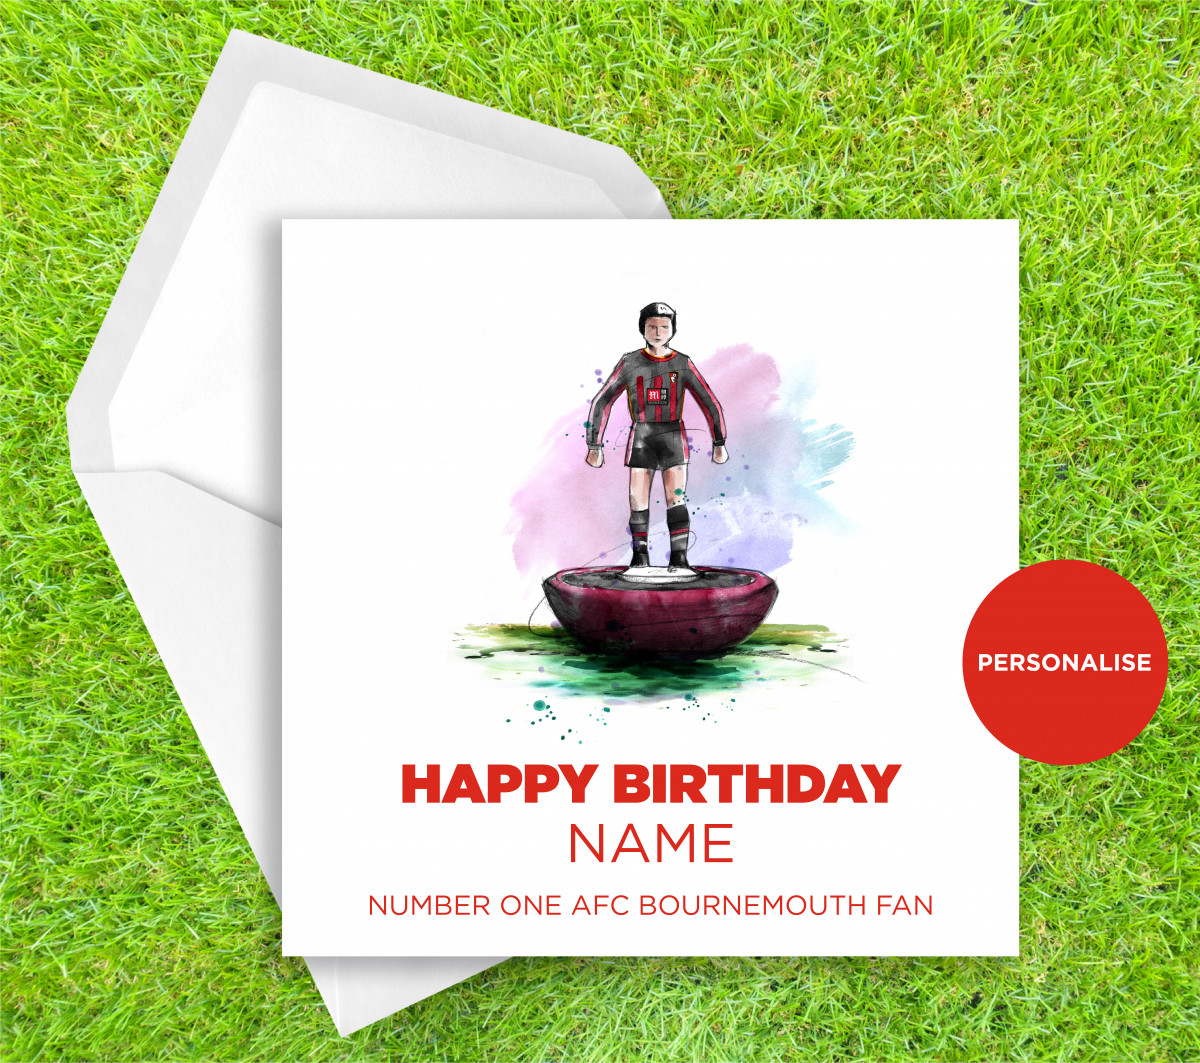 AFC Bournemouth, Subbuteo, personalised birthday card